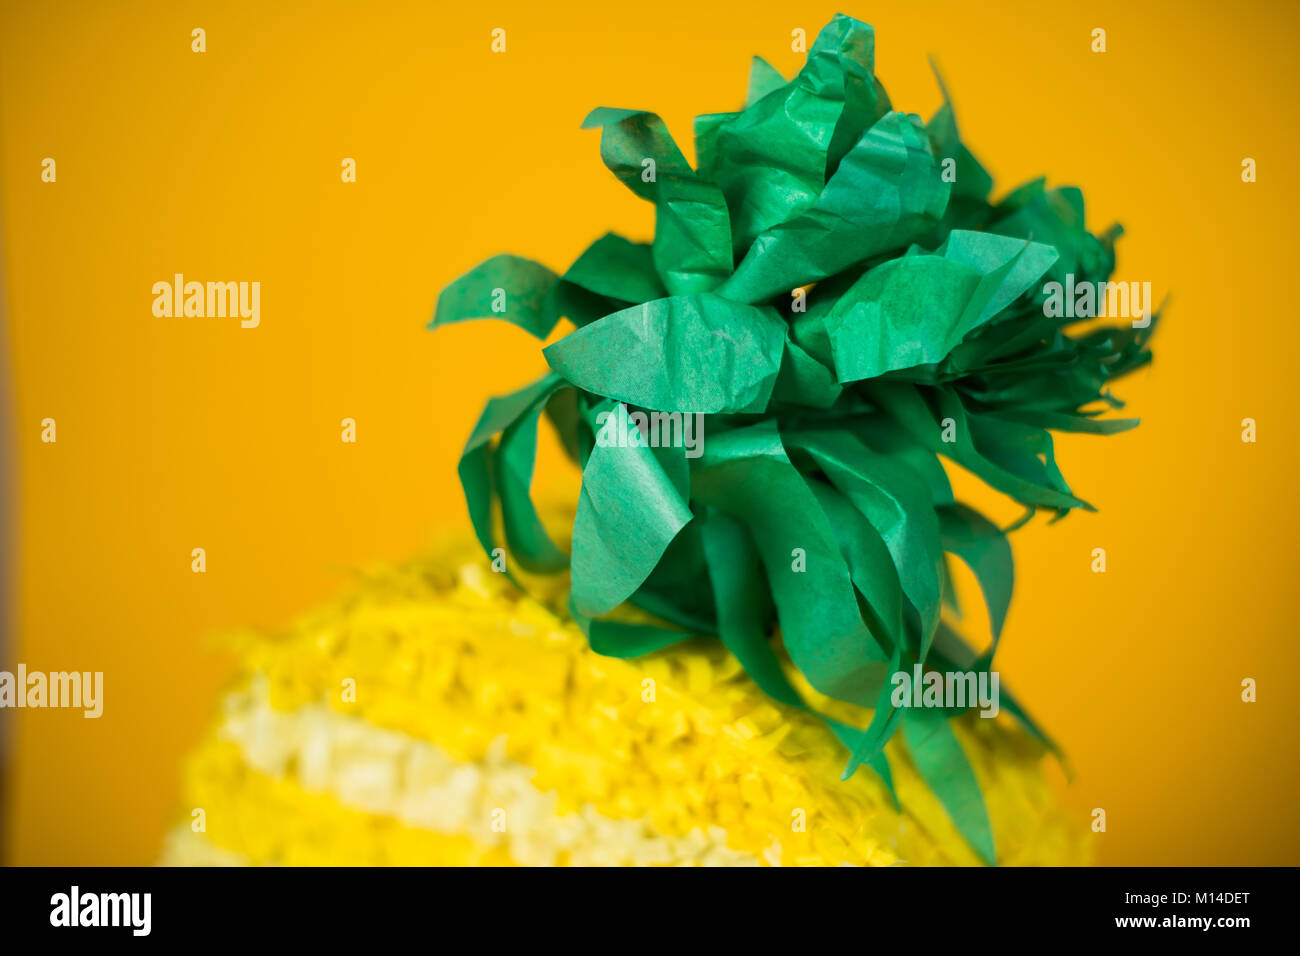 A pineapple piñata among a yellow backdrop Stock Photo